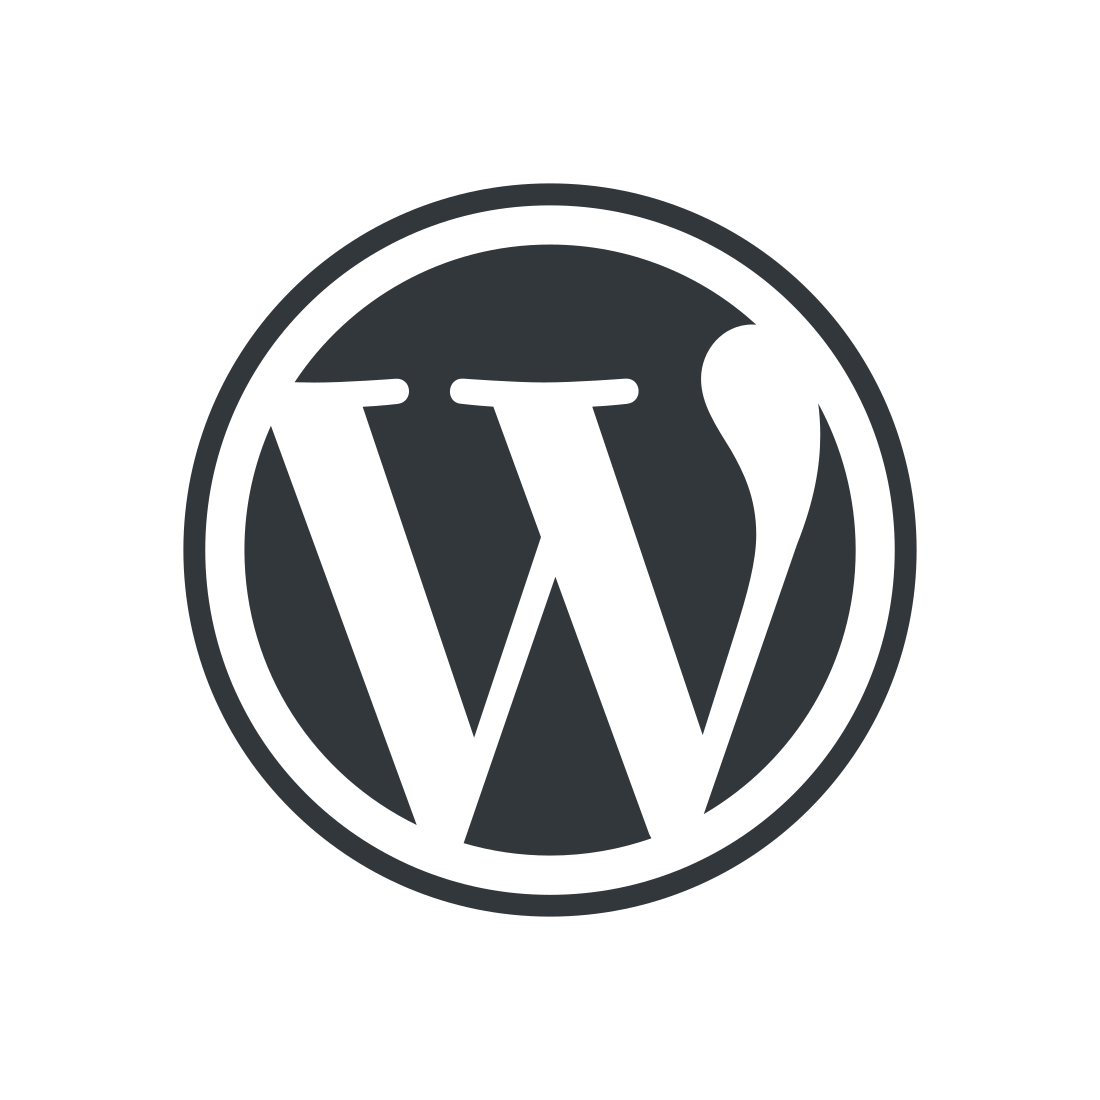 wordpress logo 5 1 - Wordpress Logo